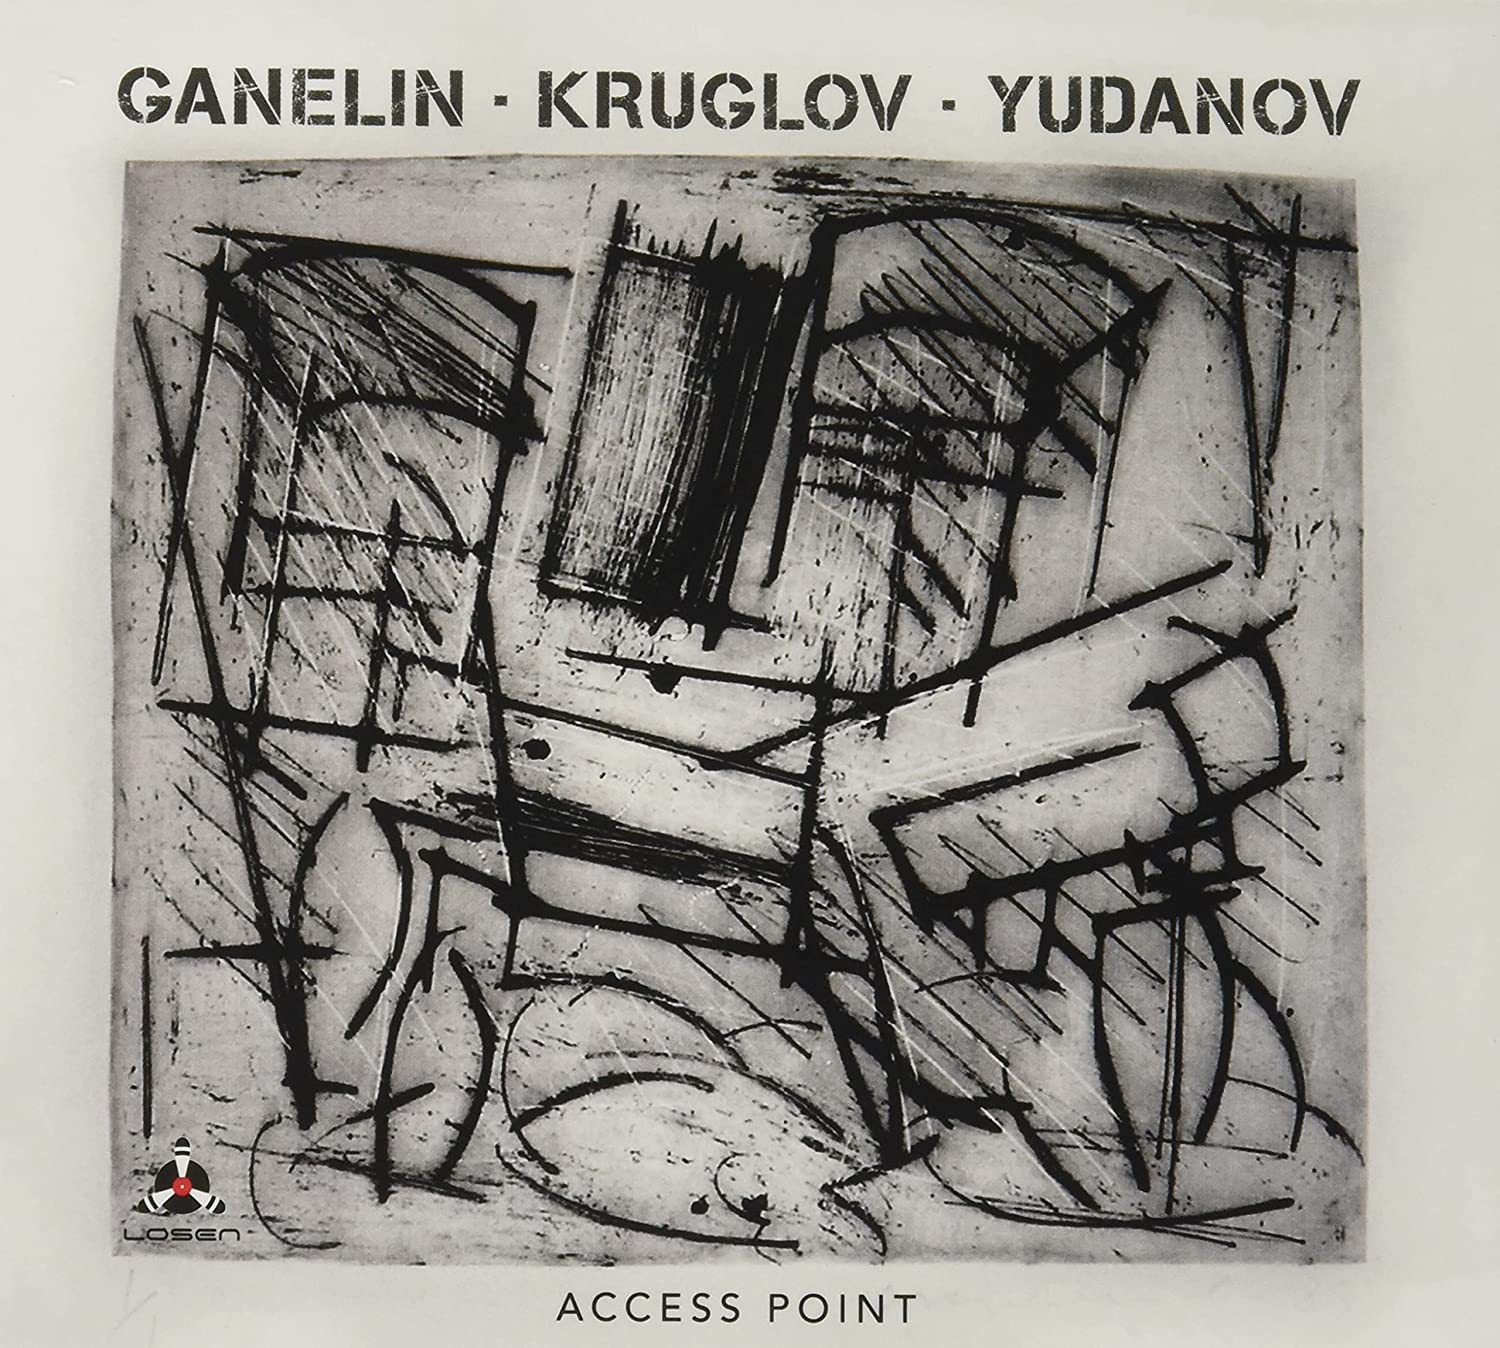 GANELIN TRIO/SLAVA GANELIN - Ganelin - Kruglov - Yudanov : Access Point cover 